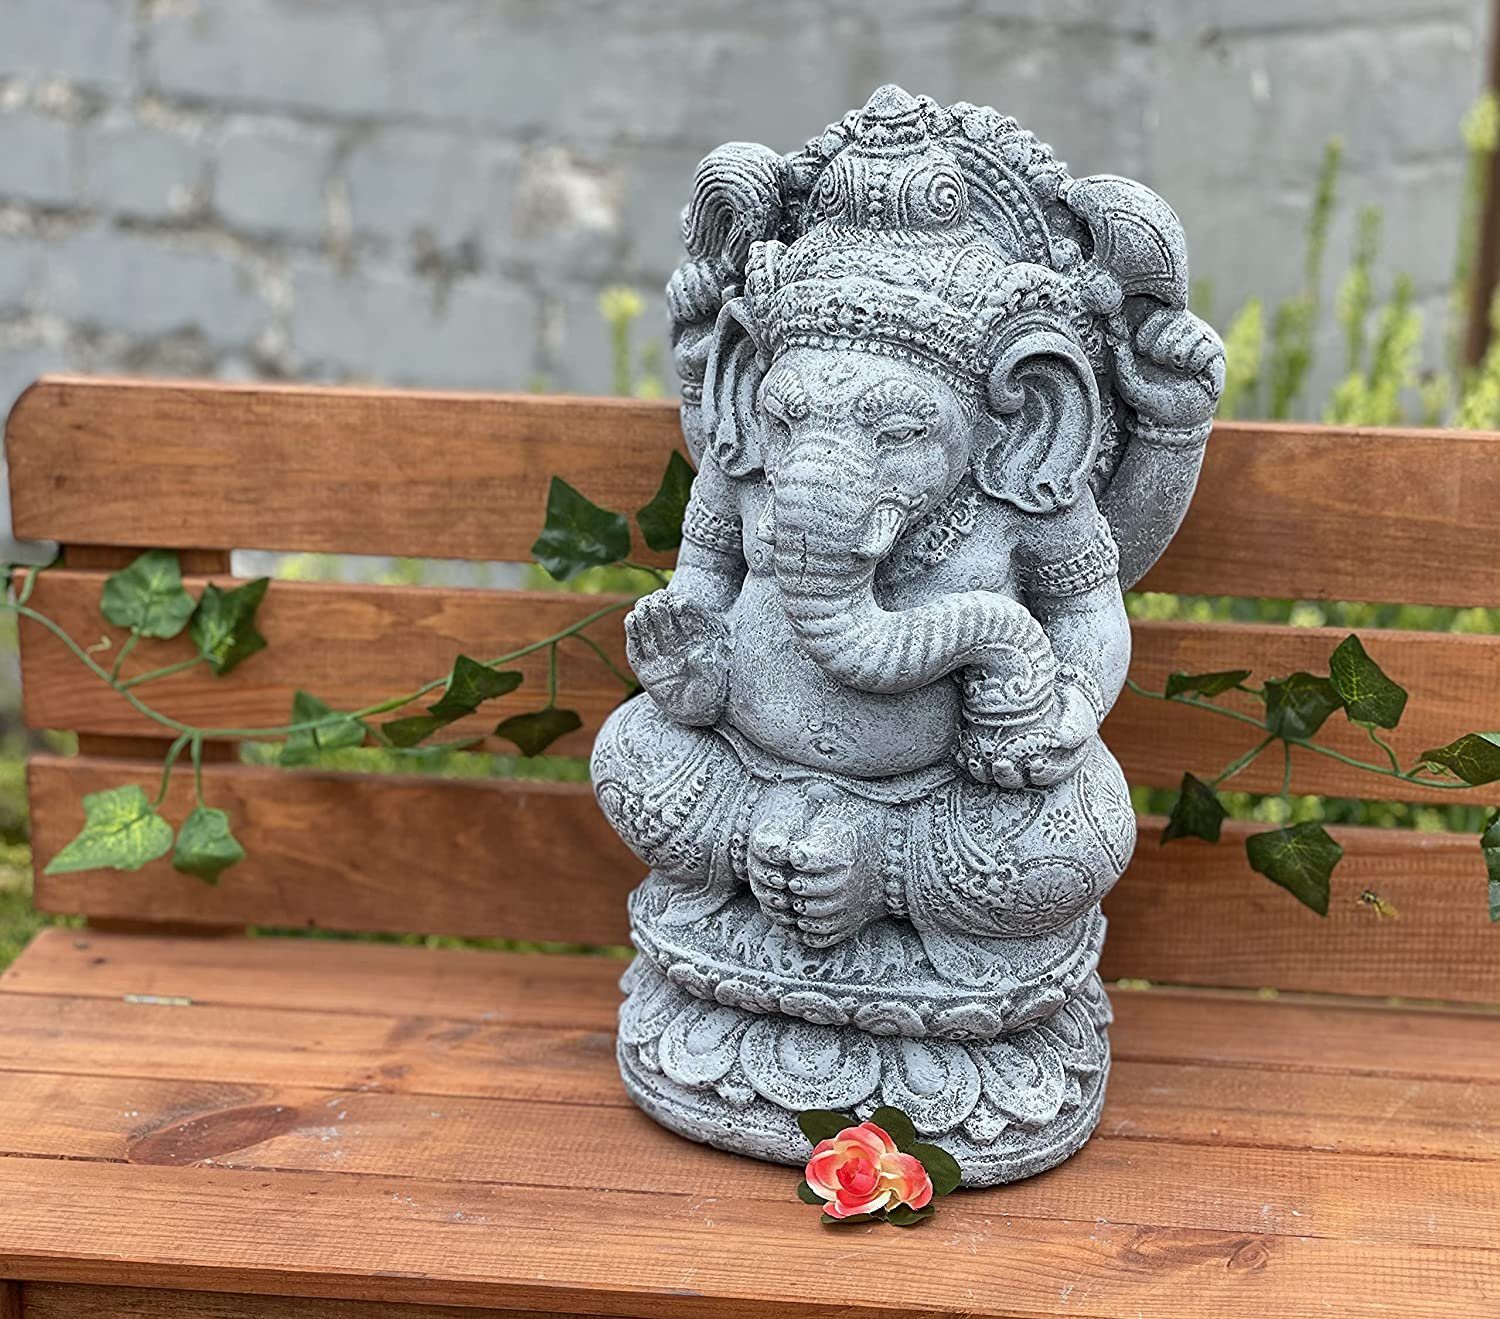 Gartenfigur Style and Ganesha Statue Stone